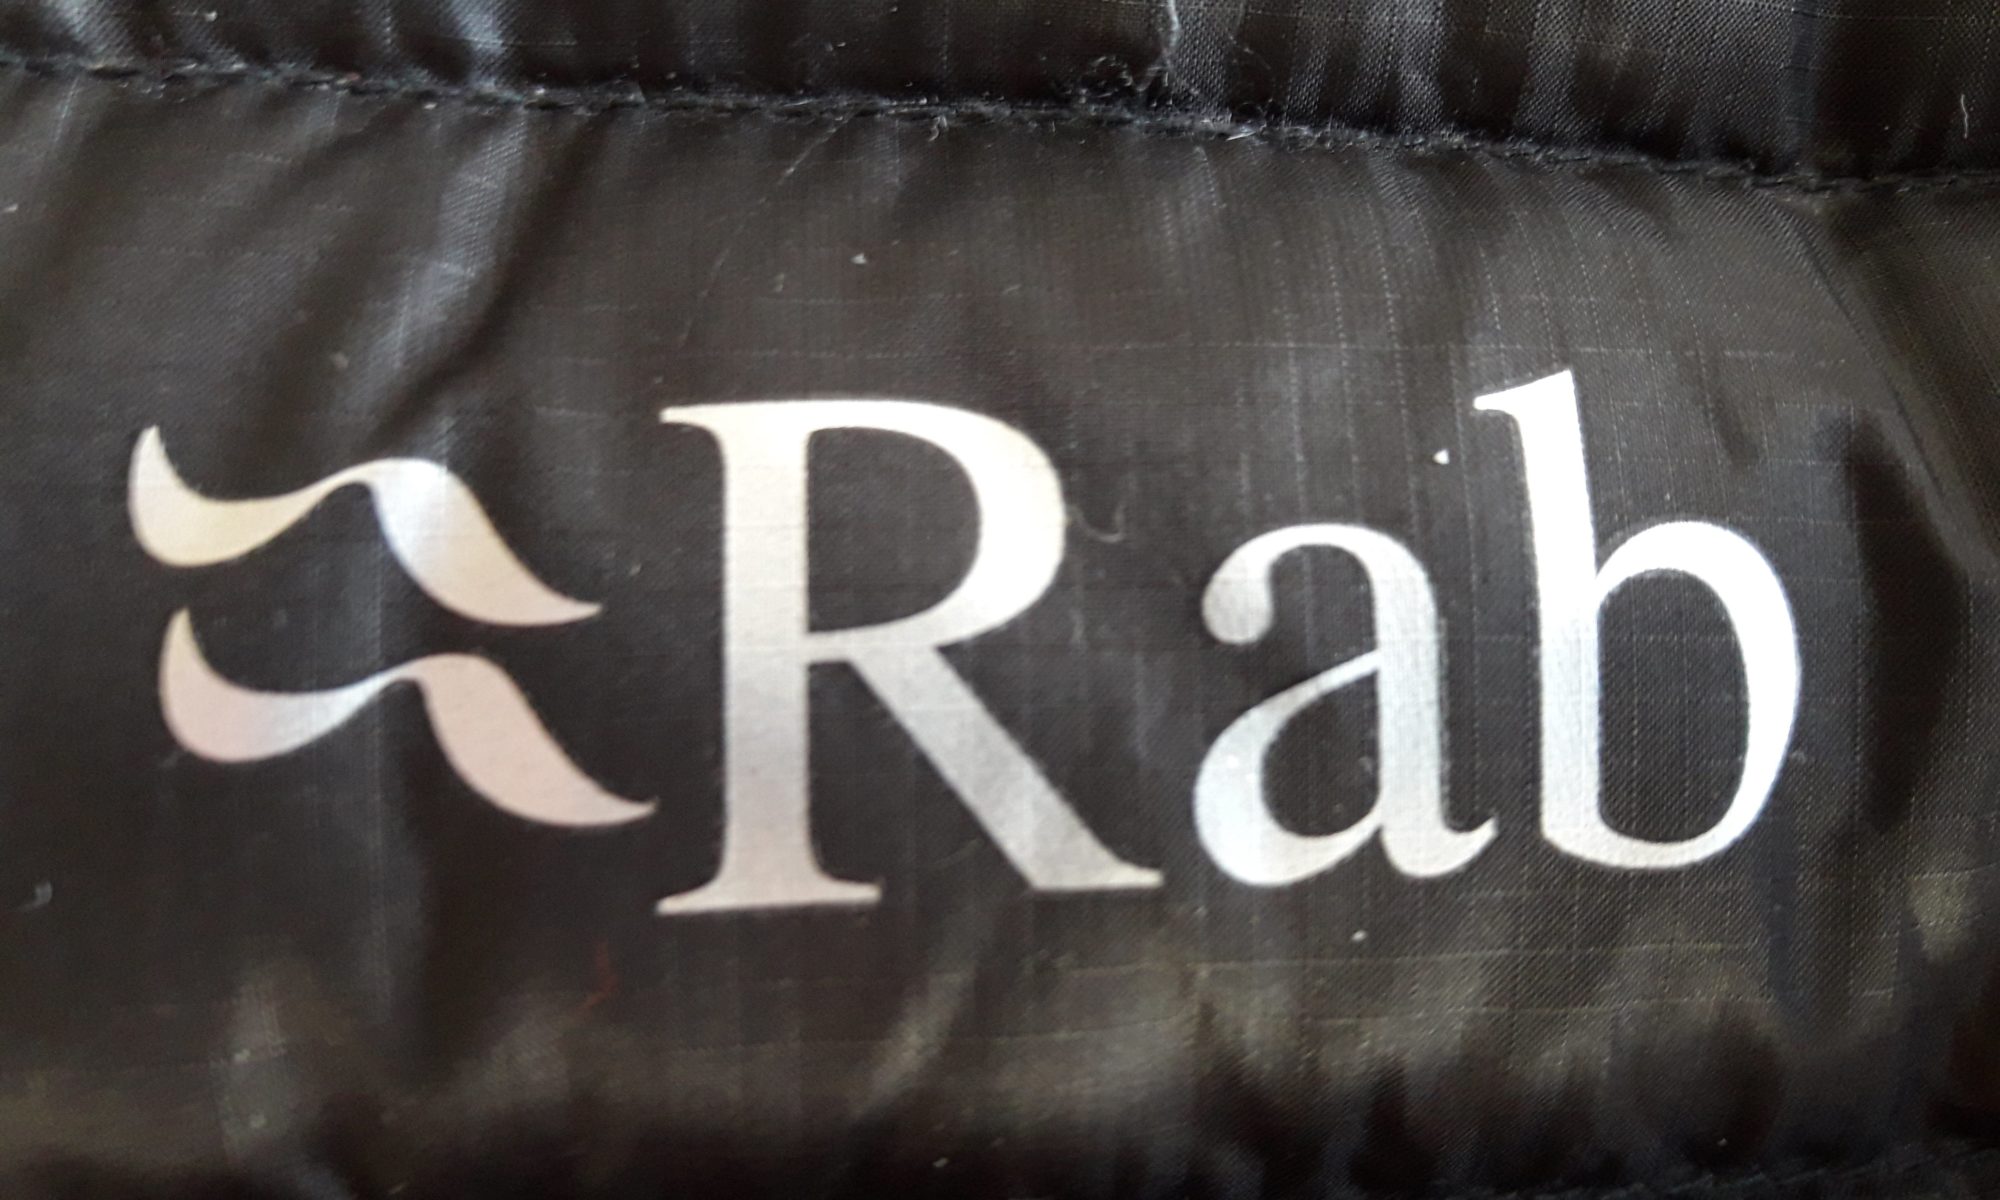 Rab logo